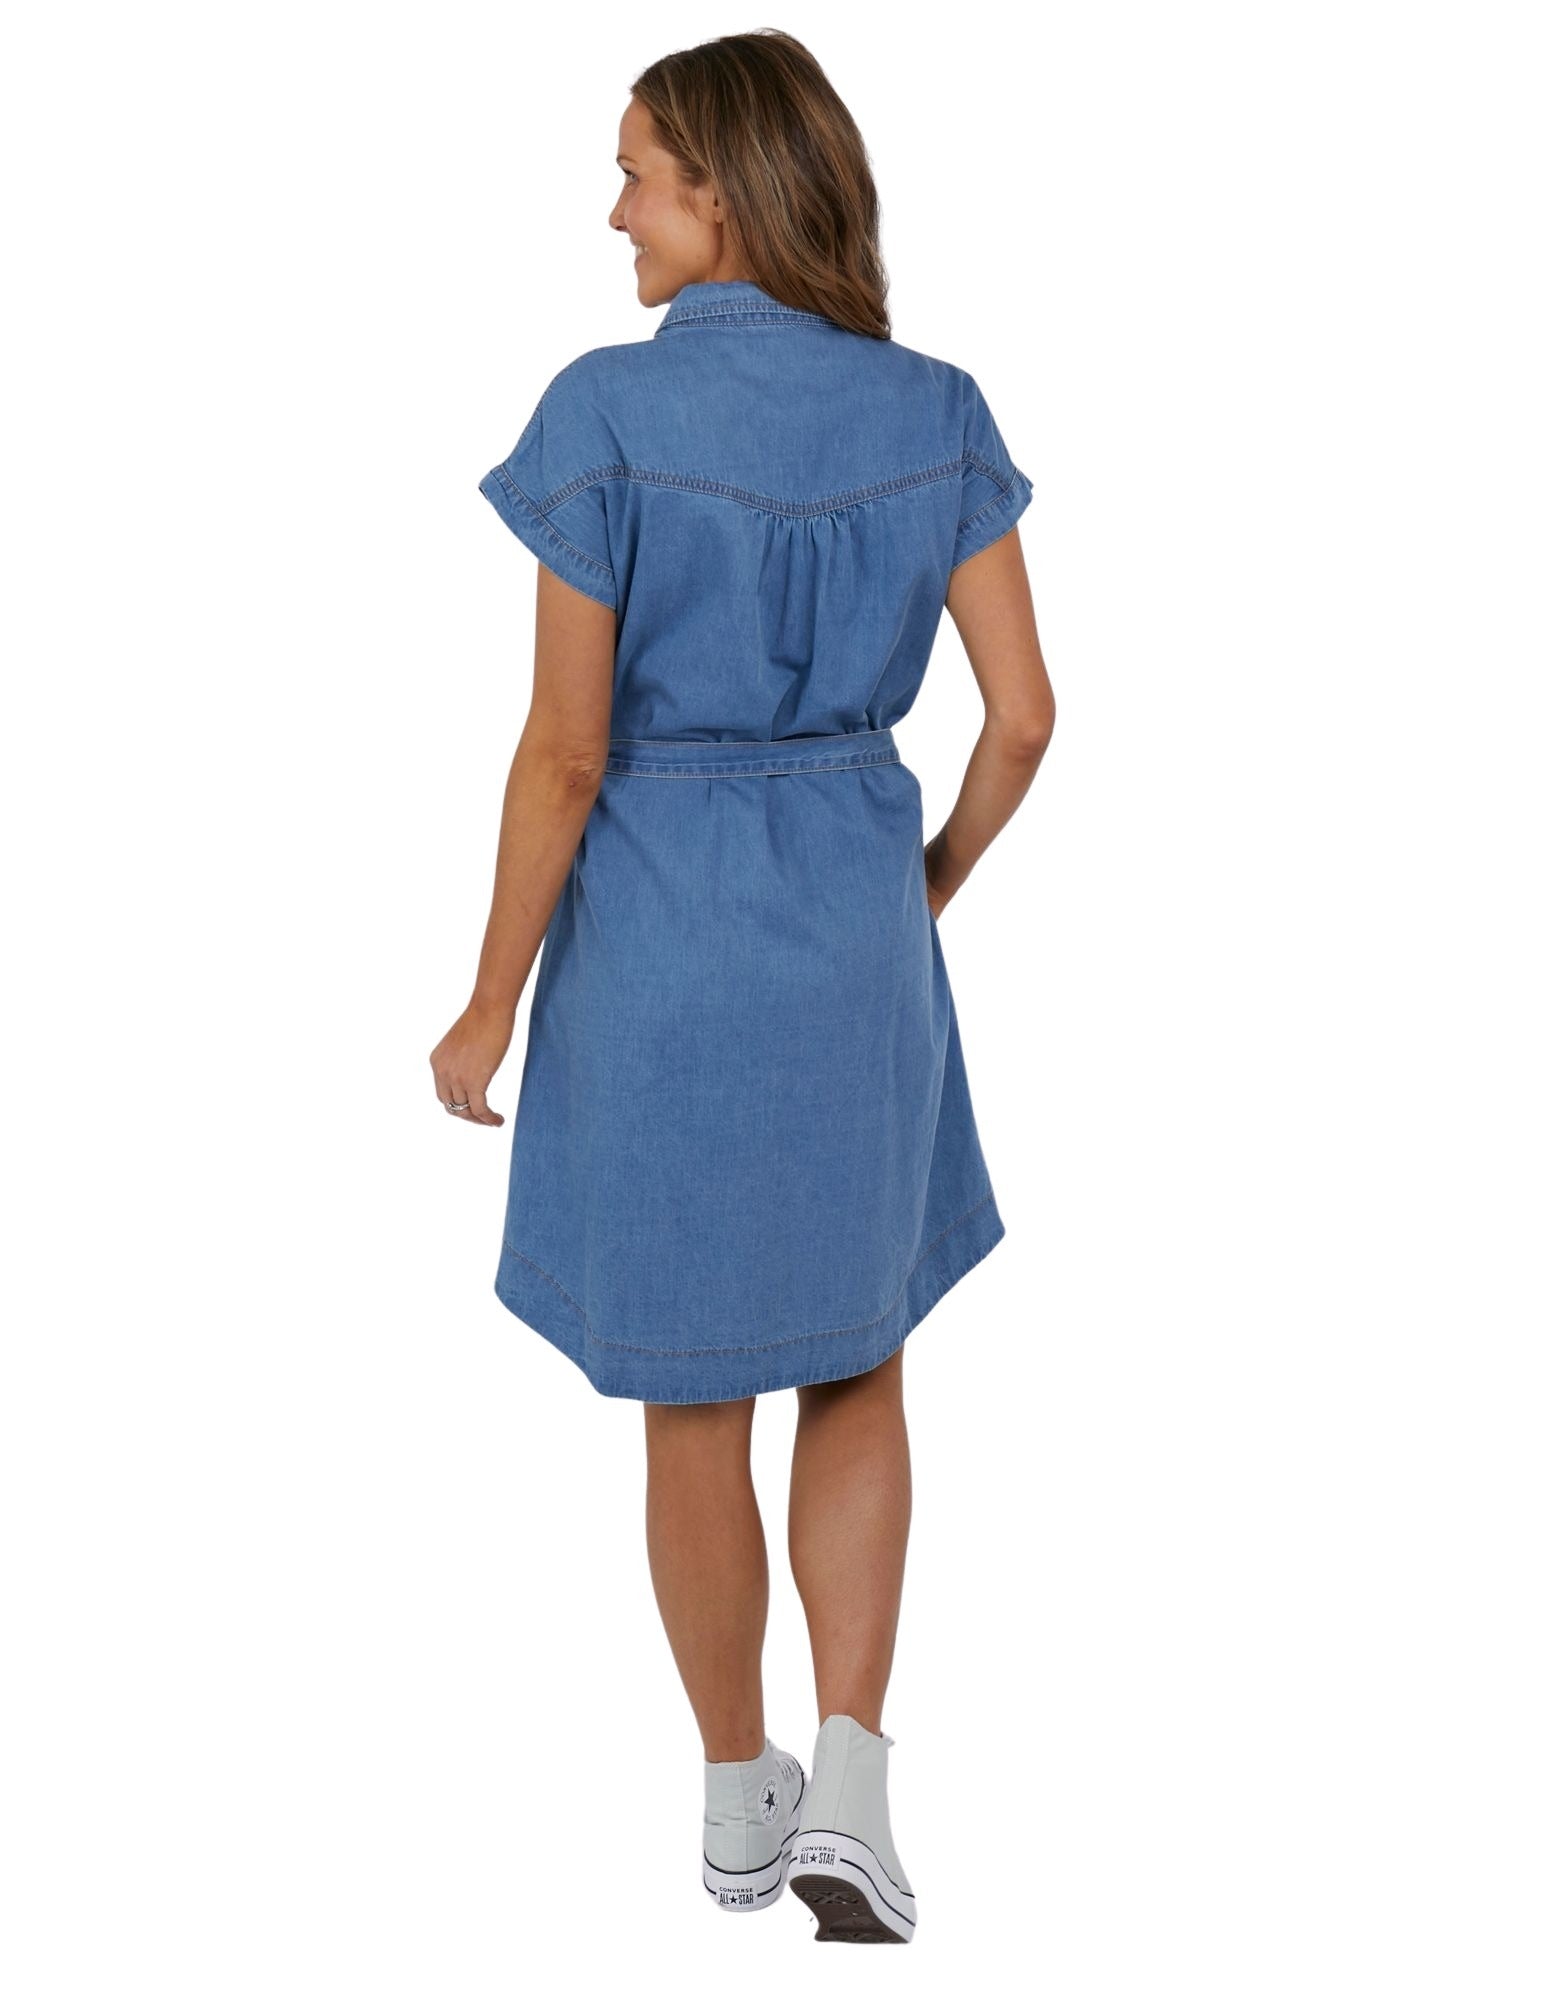 Elm - Everleigh Denim Dress - Blue - Last One Size 16!